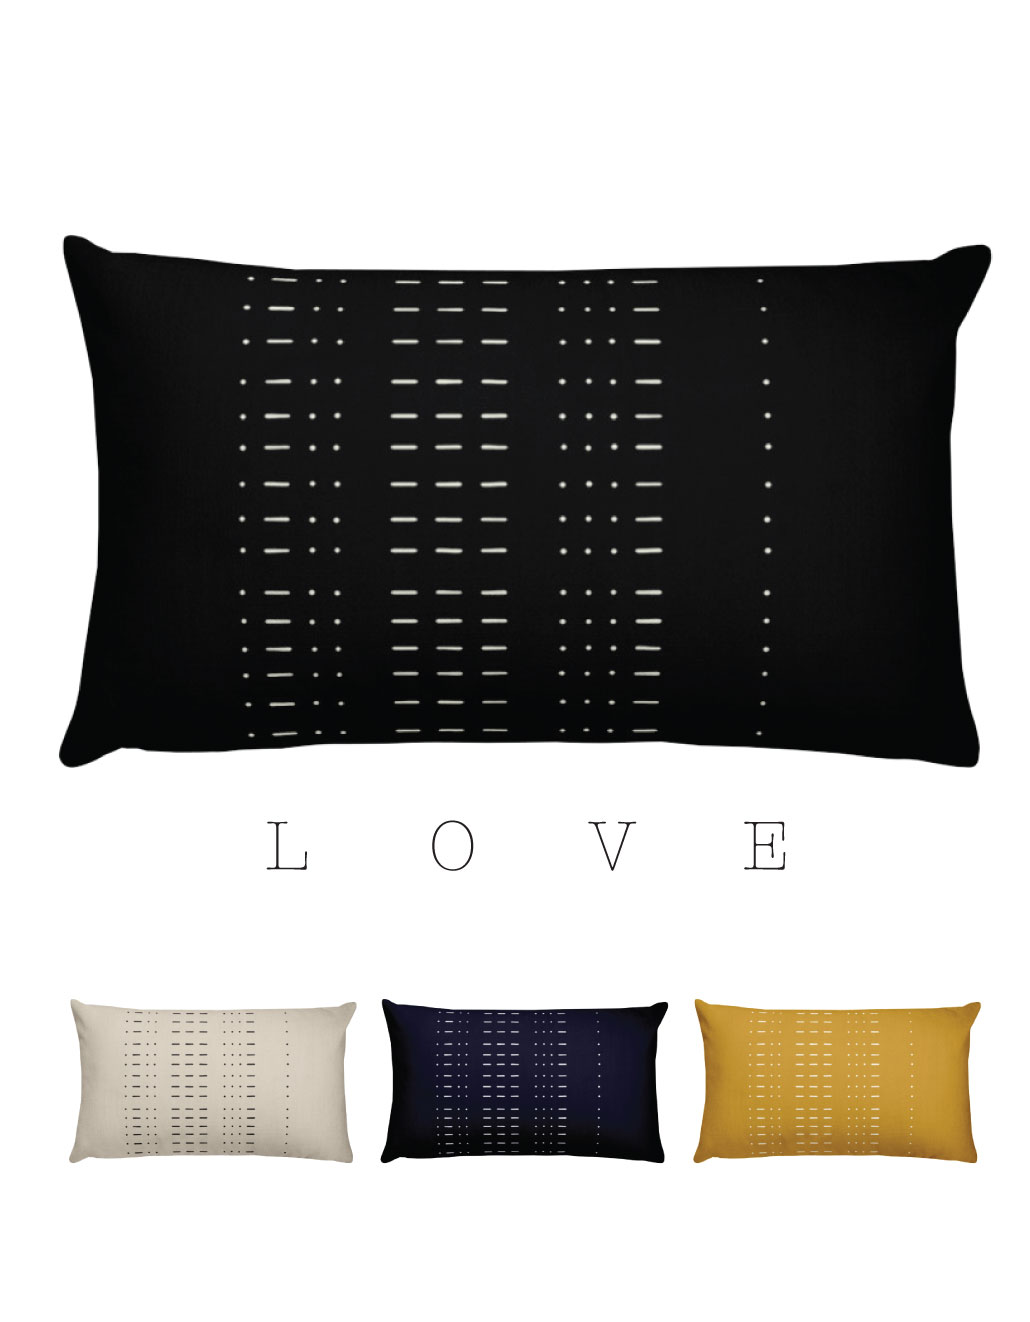 Coded Love – black morse code “LOVE” lumbar pillow